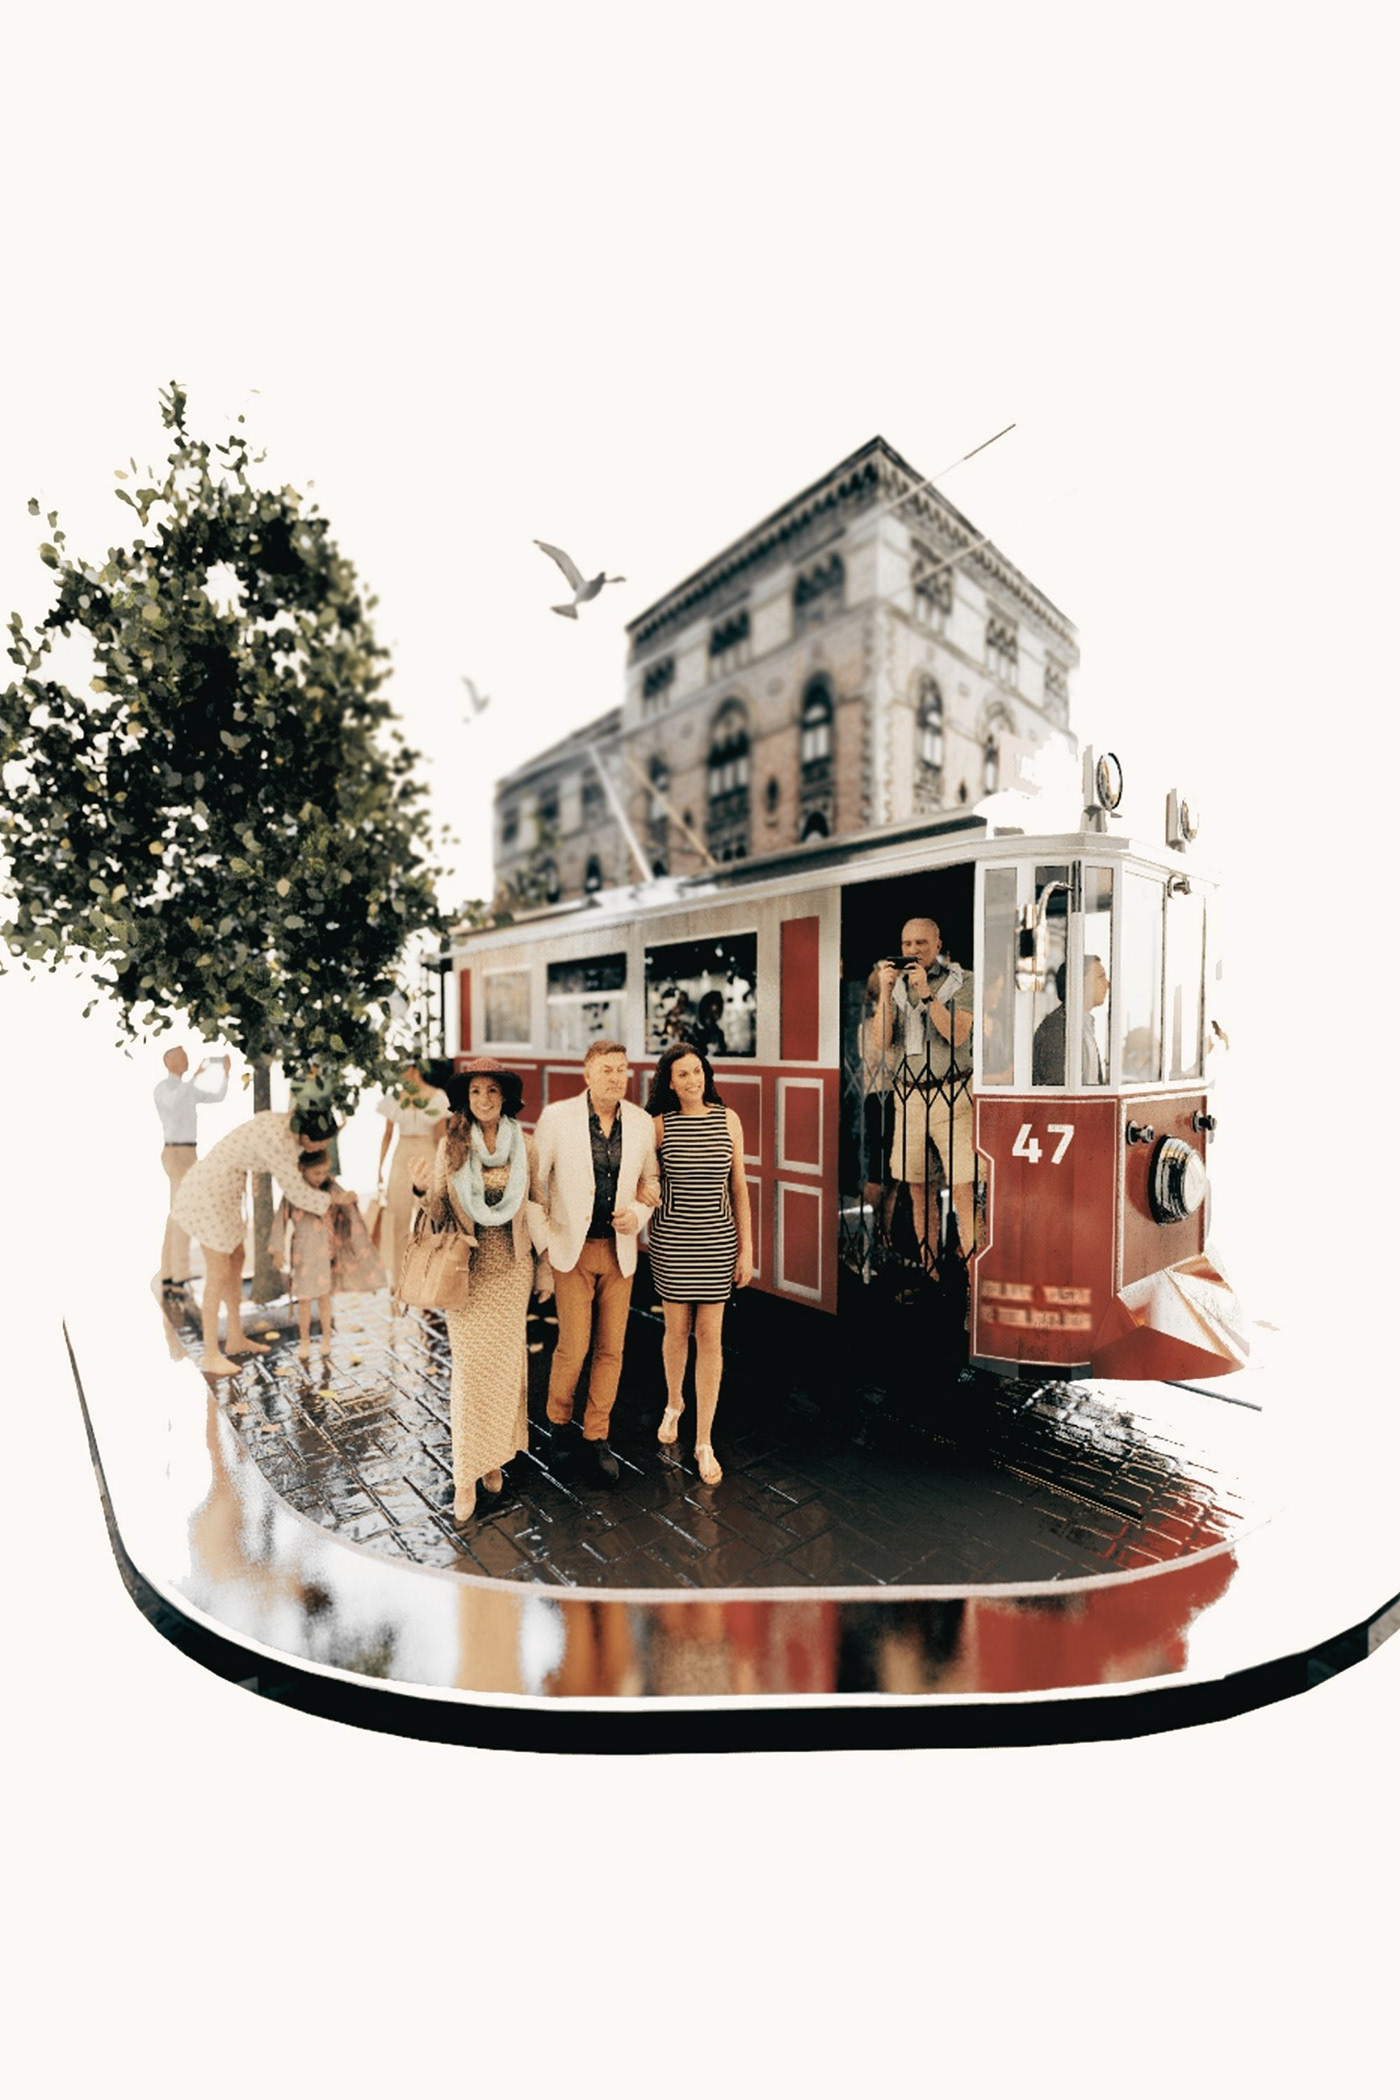 beyoglu istanbul istiklal old Retro Street Taksim tramvay Urban vintage